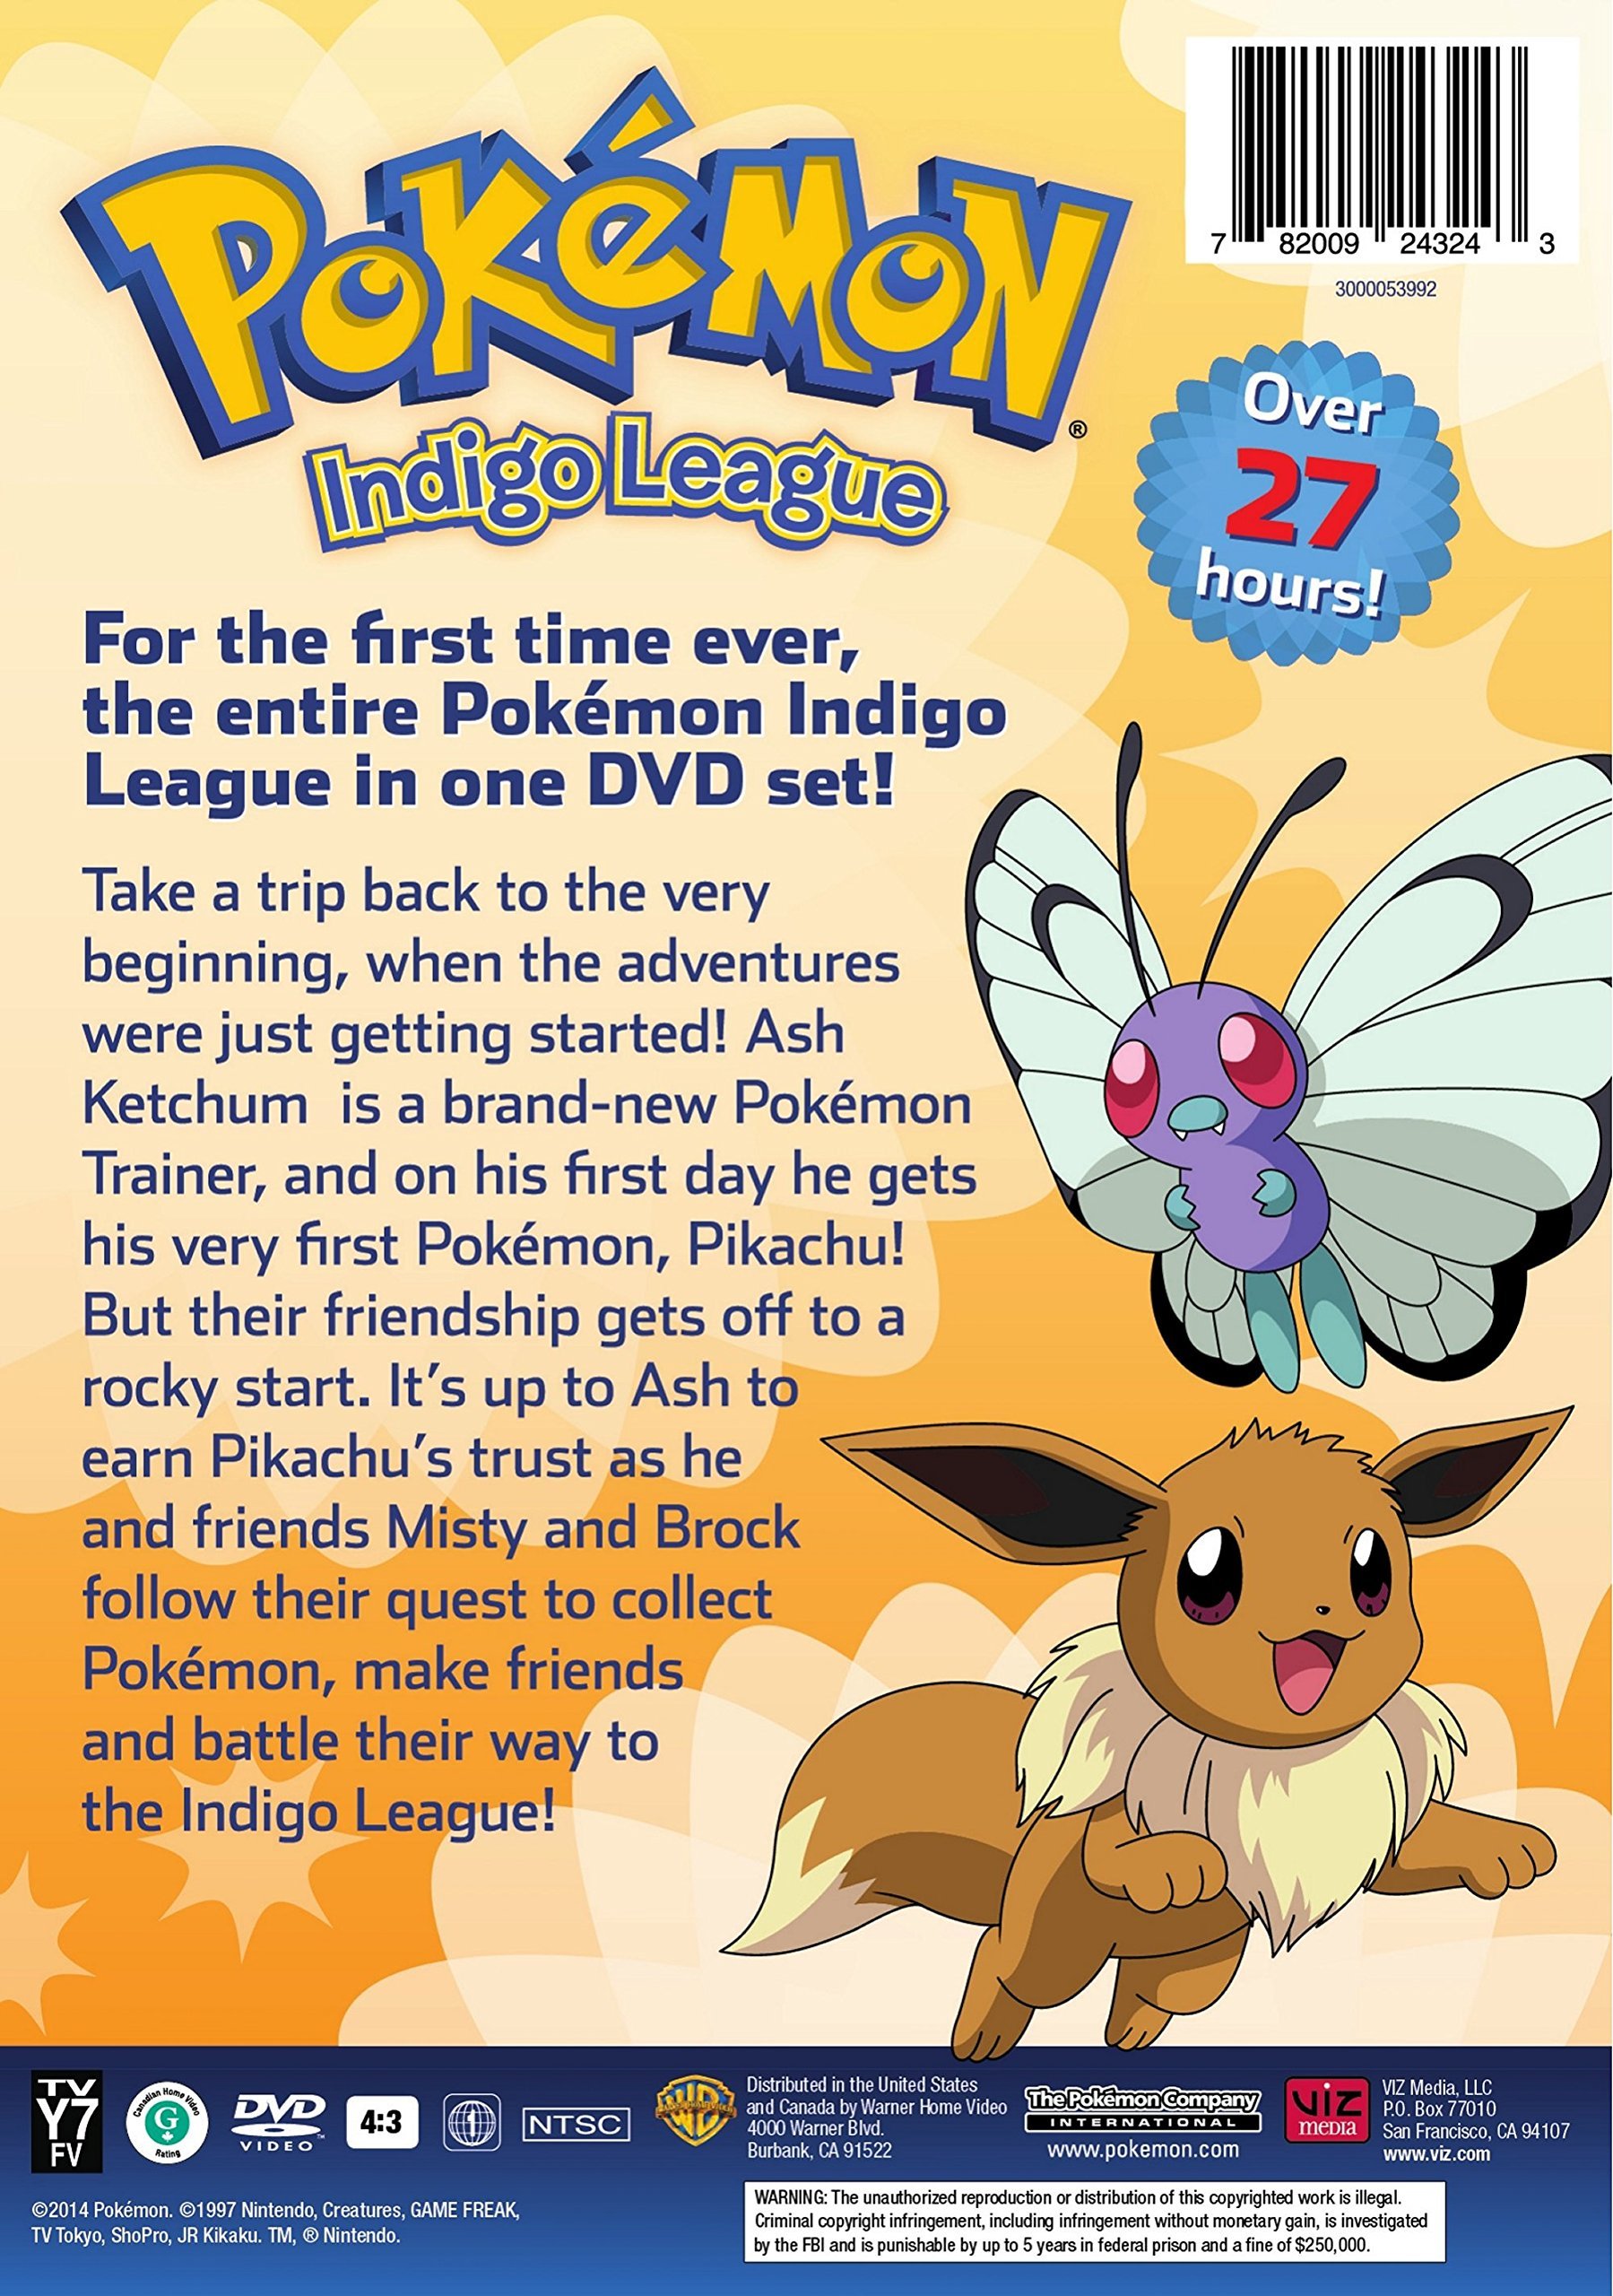 Pokemon: Indigo League - The Complete Collection (DVD), Viz Media, Anime - image 2 of 2